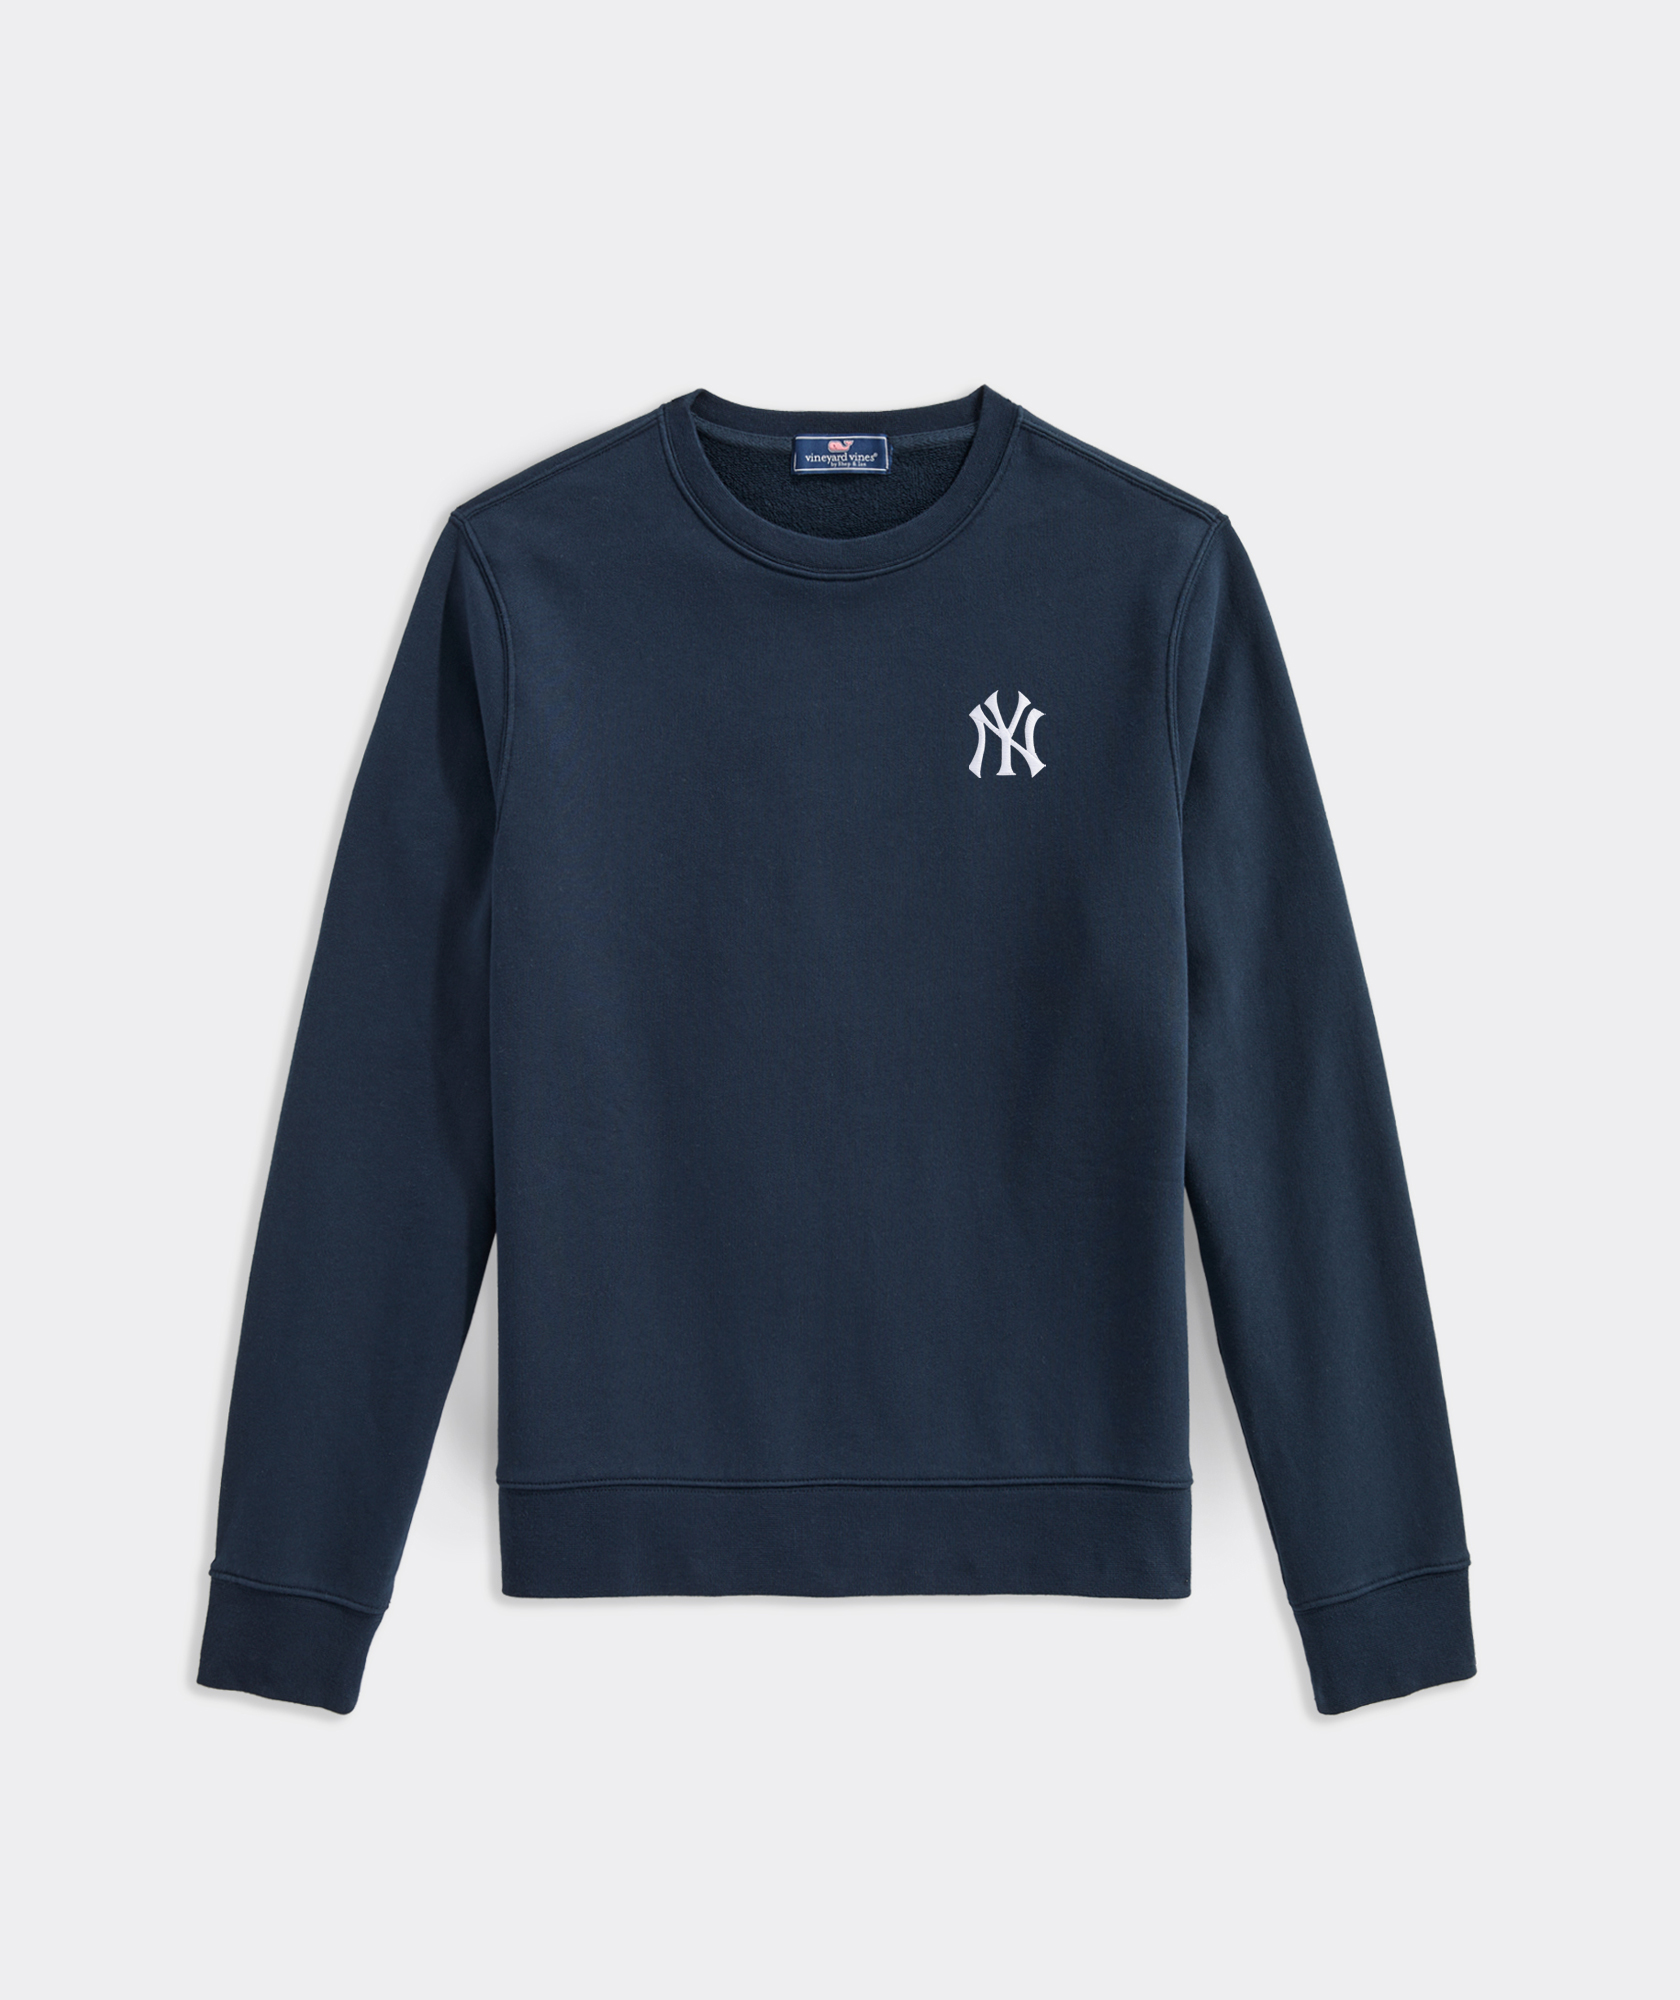 Official New York Yankees Polos, Yankees Golf Shirts, Dress Shirts